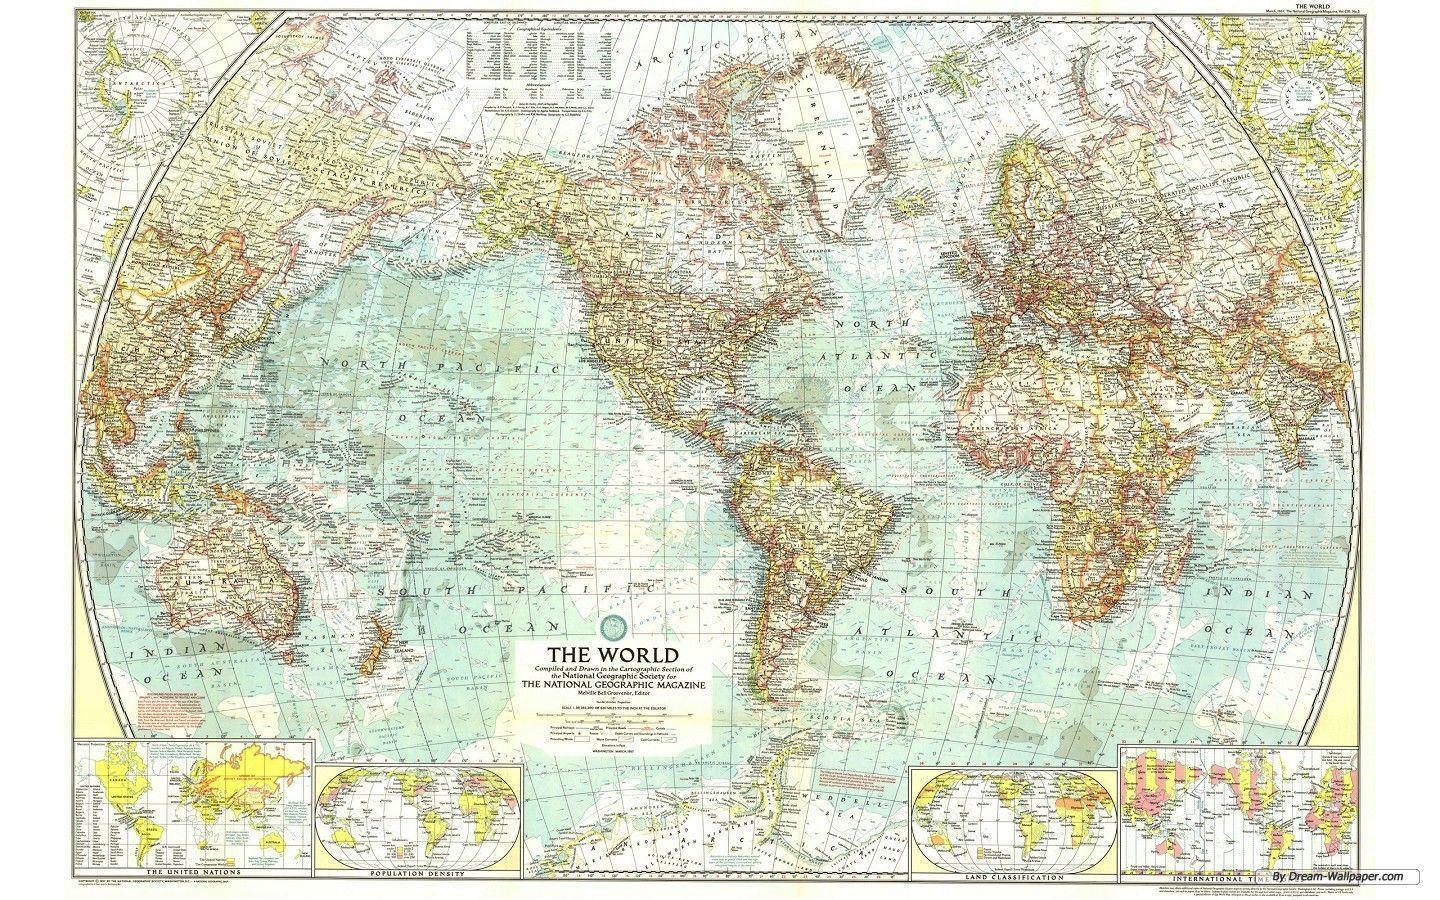 world map background